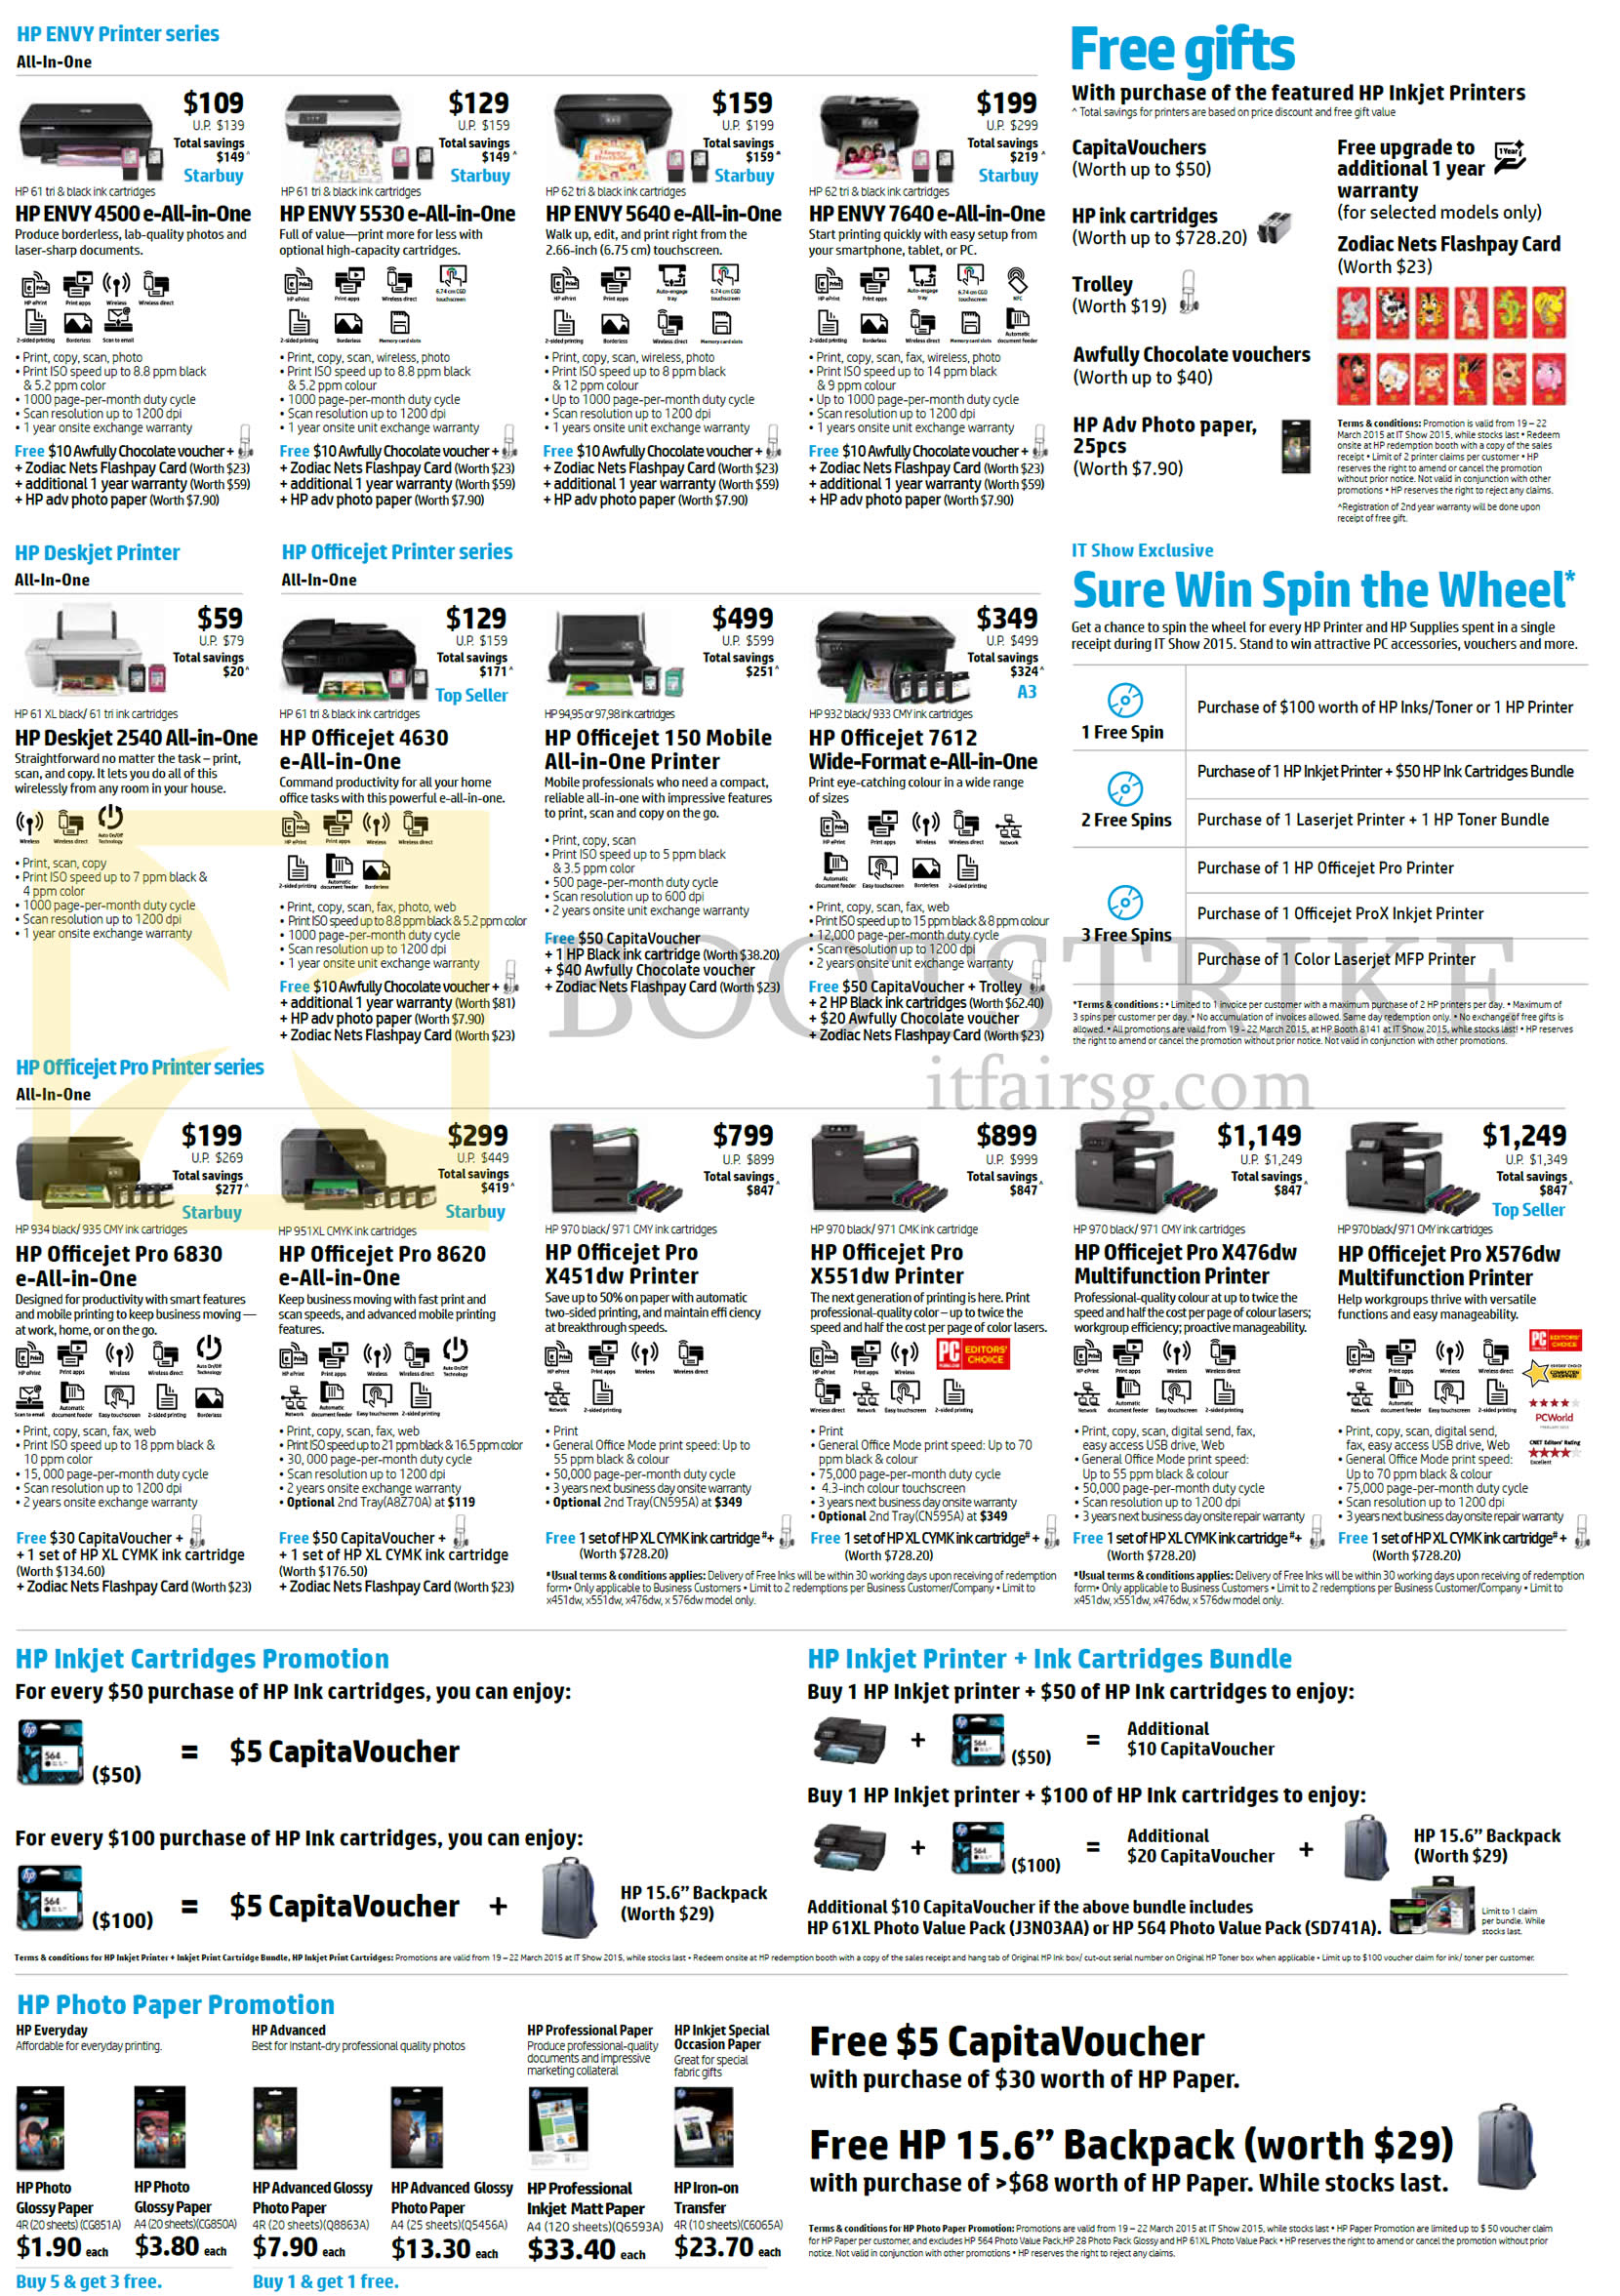 IT SHOW 2015 price list image brochure of HP Printers Inkjet Envy 4500, 5530, 5640, 7640, Deskjet 2540, Officejet 4630, 150, 7612, 6830, 8620, X451dw, X551dw, X476dw, X576dw